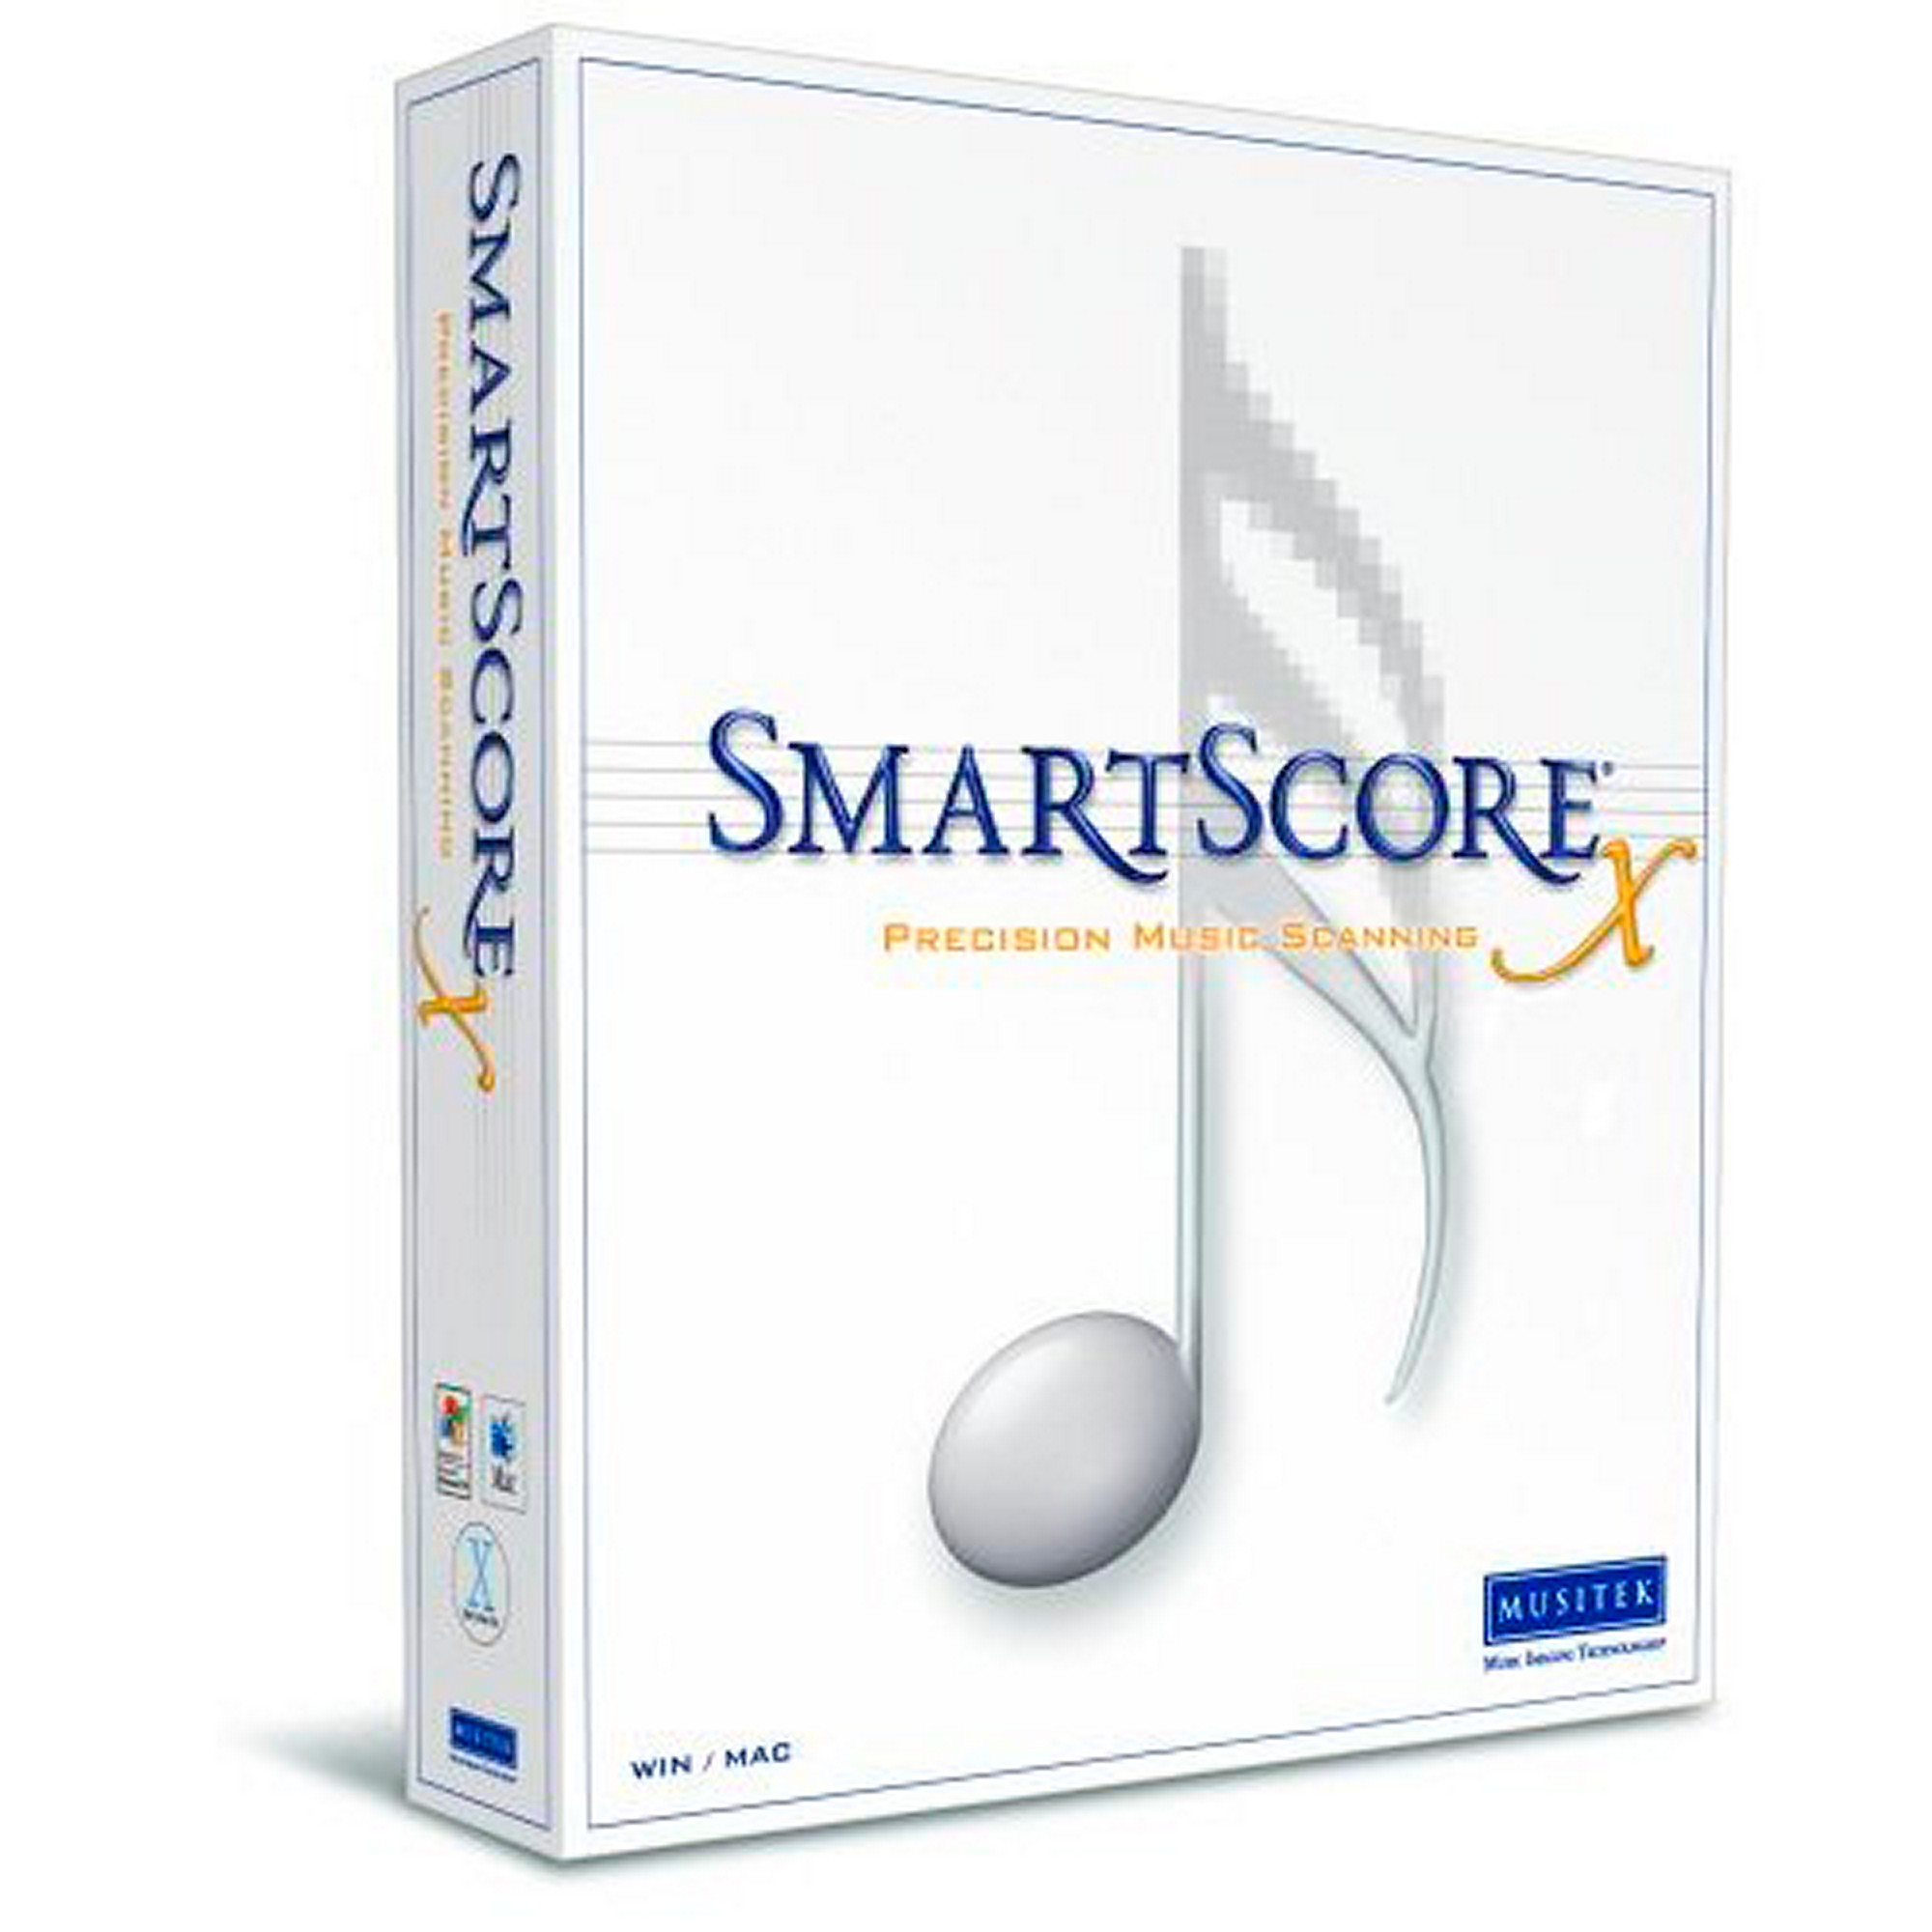 smartscore x2 pro want open properly